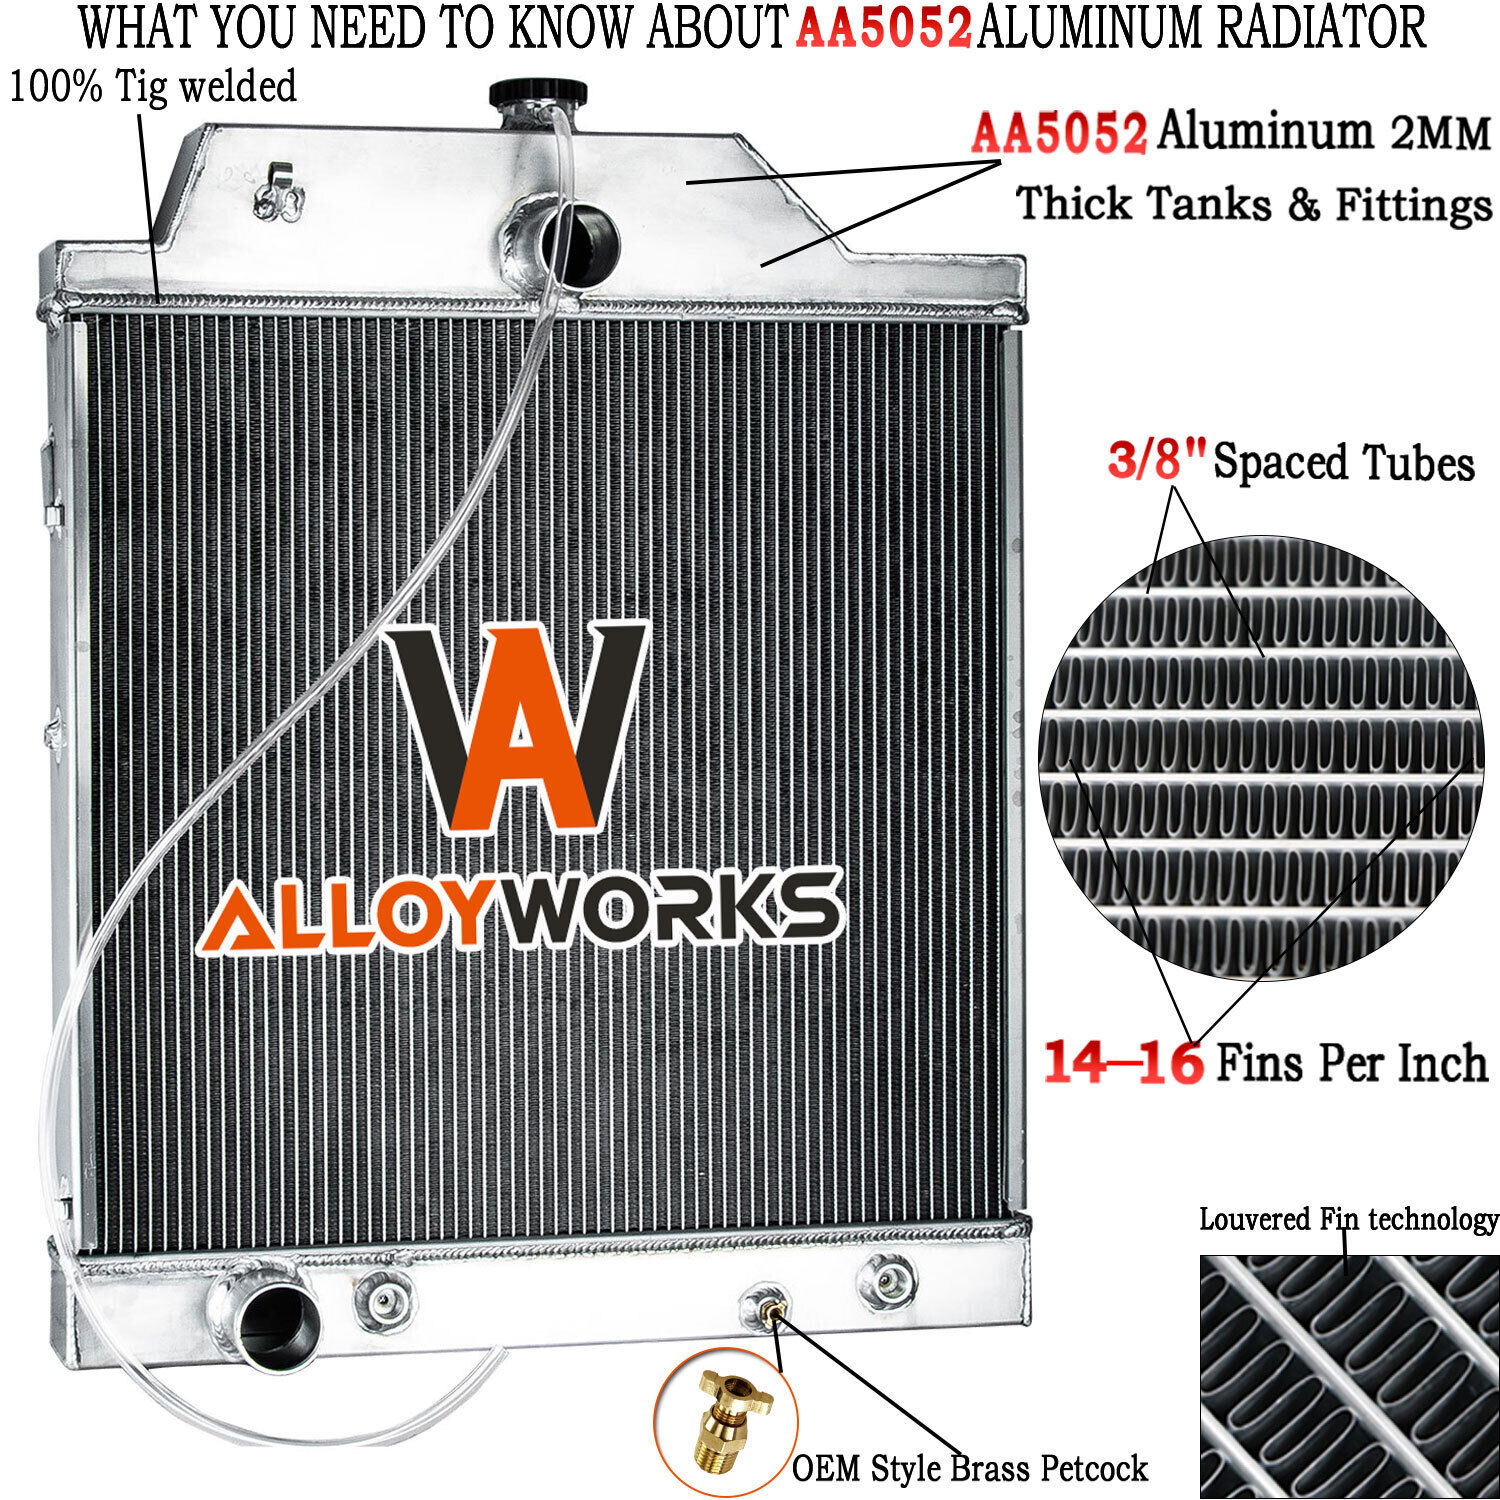 70267976 Aluminum 4 Row Radiator For Allis Chalmers Tractors 7030 7040 7050 7060